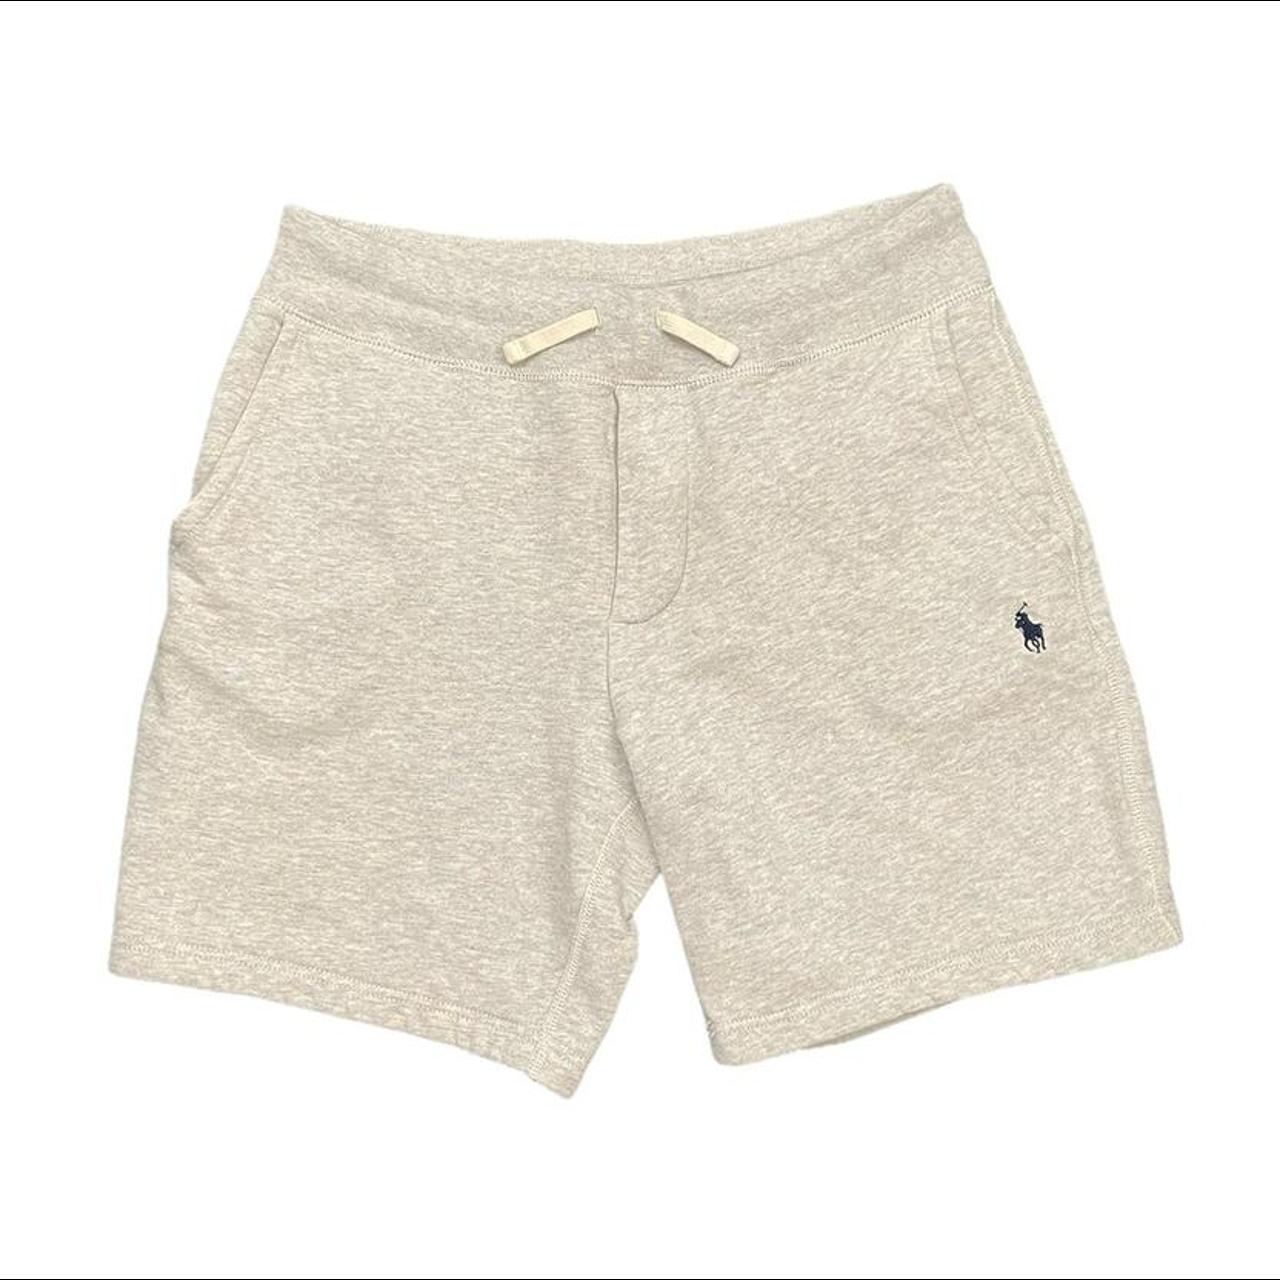 GREY RALPH LAUREN SHORTS perfect shorts for... - Depop